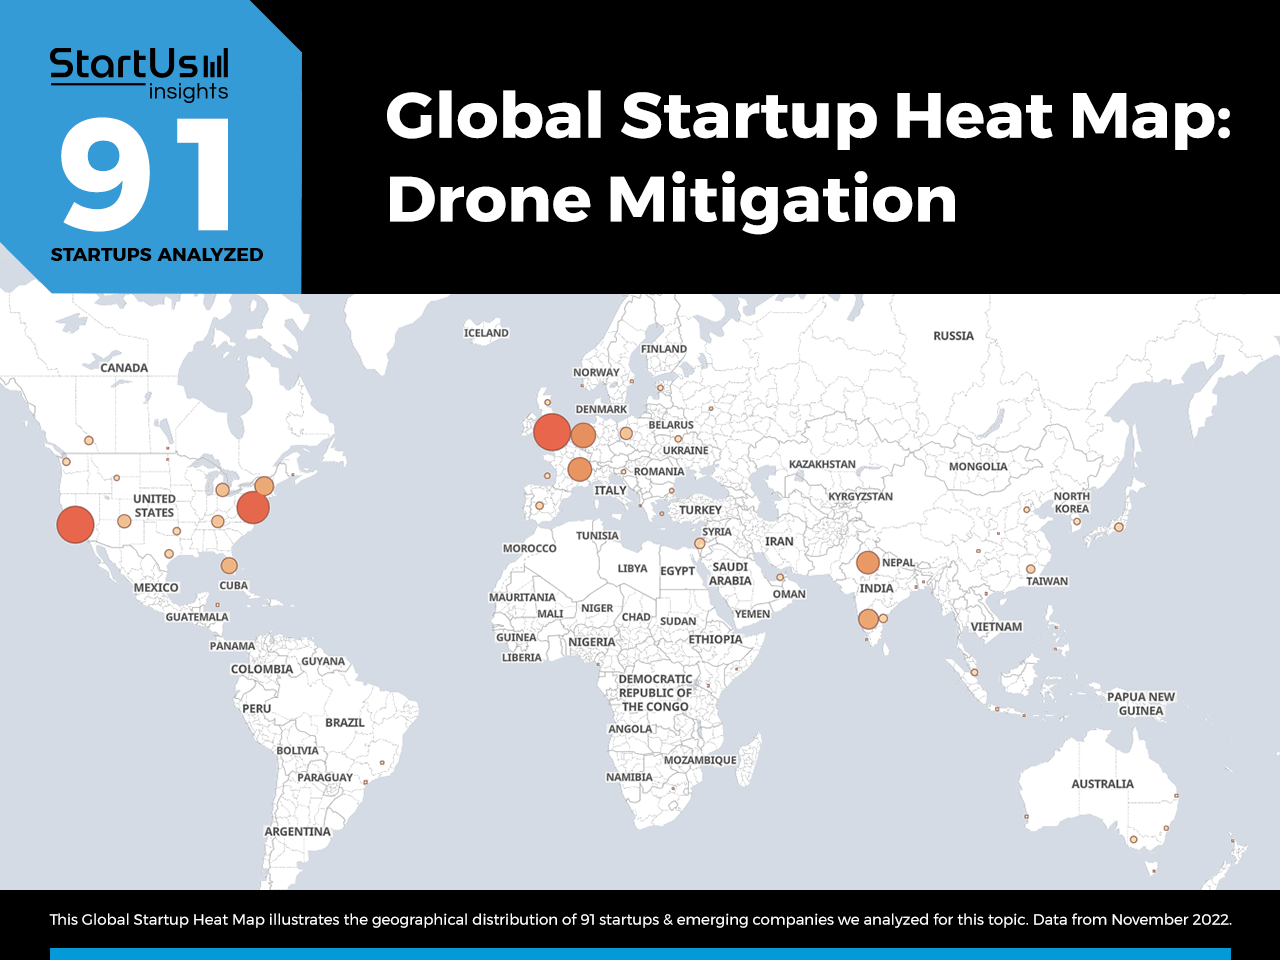 Mitigate-Combat-Drones-Heat-Map-StartUs-Insights-noresize